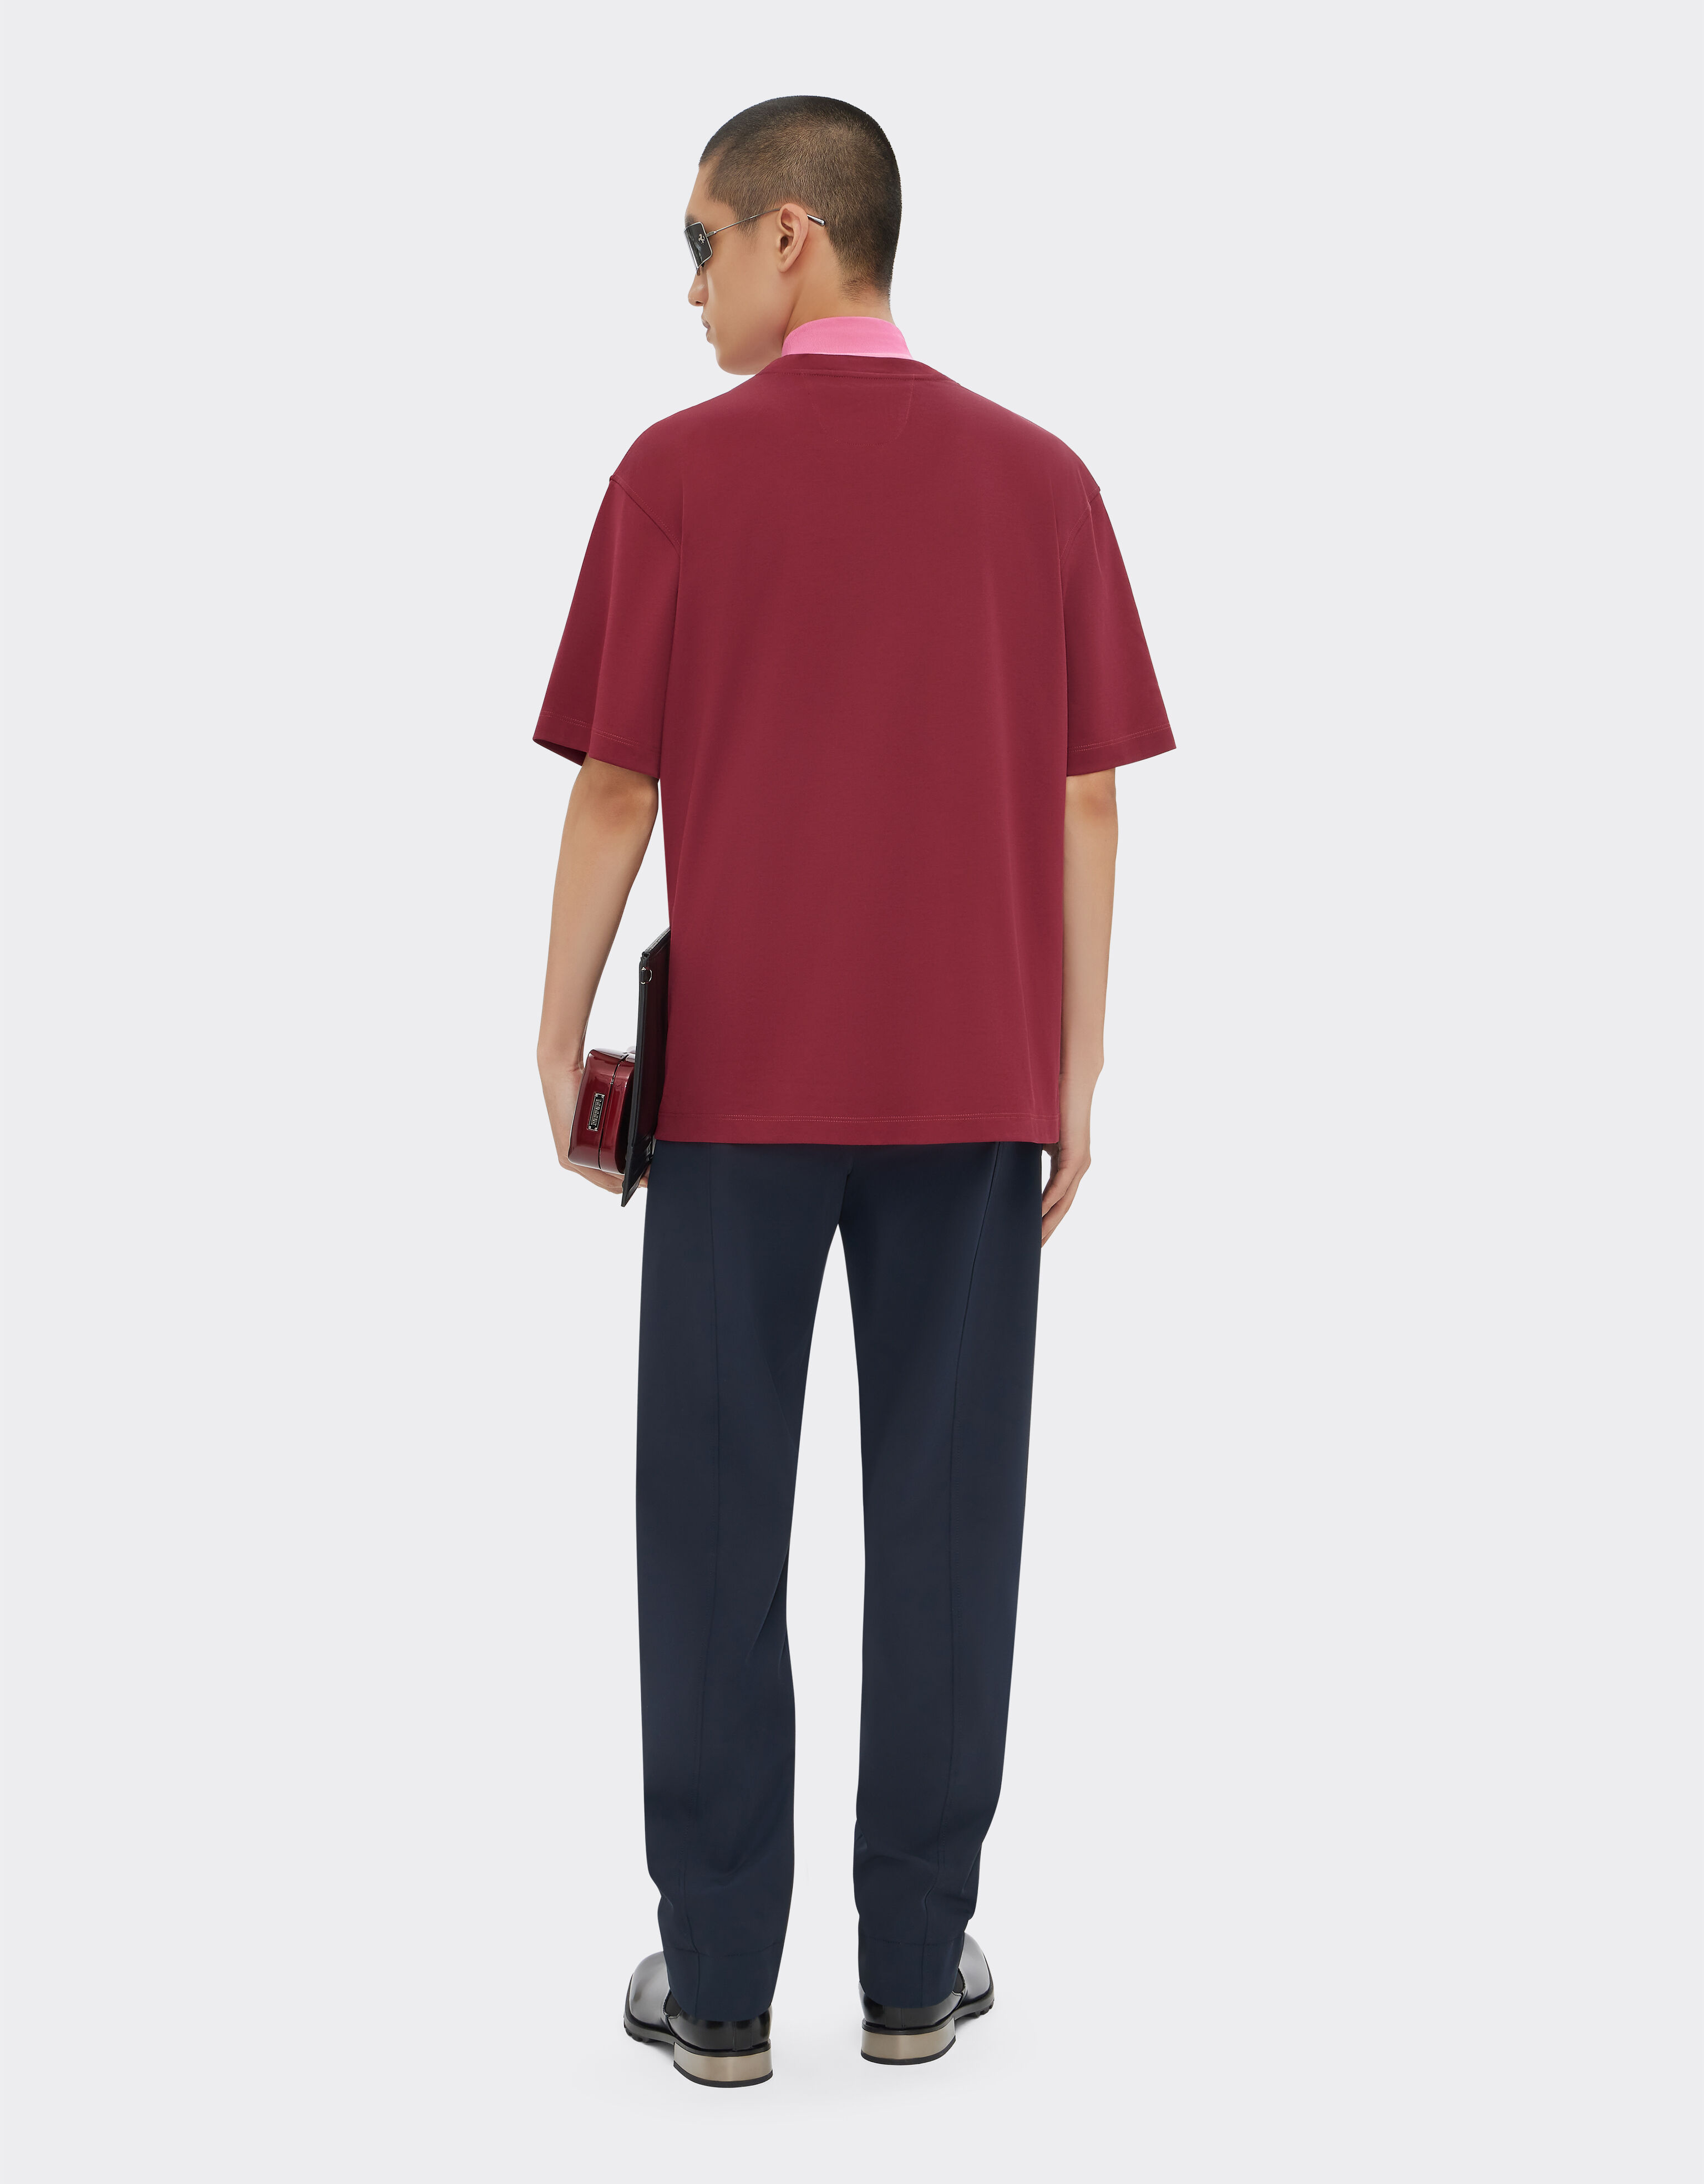 Ferrari Cotton T-shirt with Prancing Horse pocket Burgundy 47824f